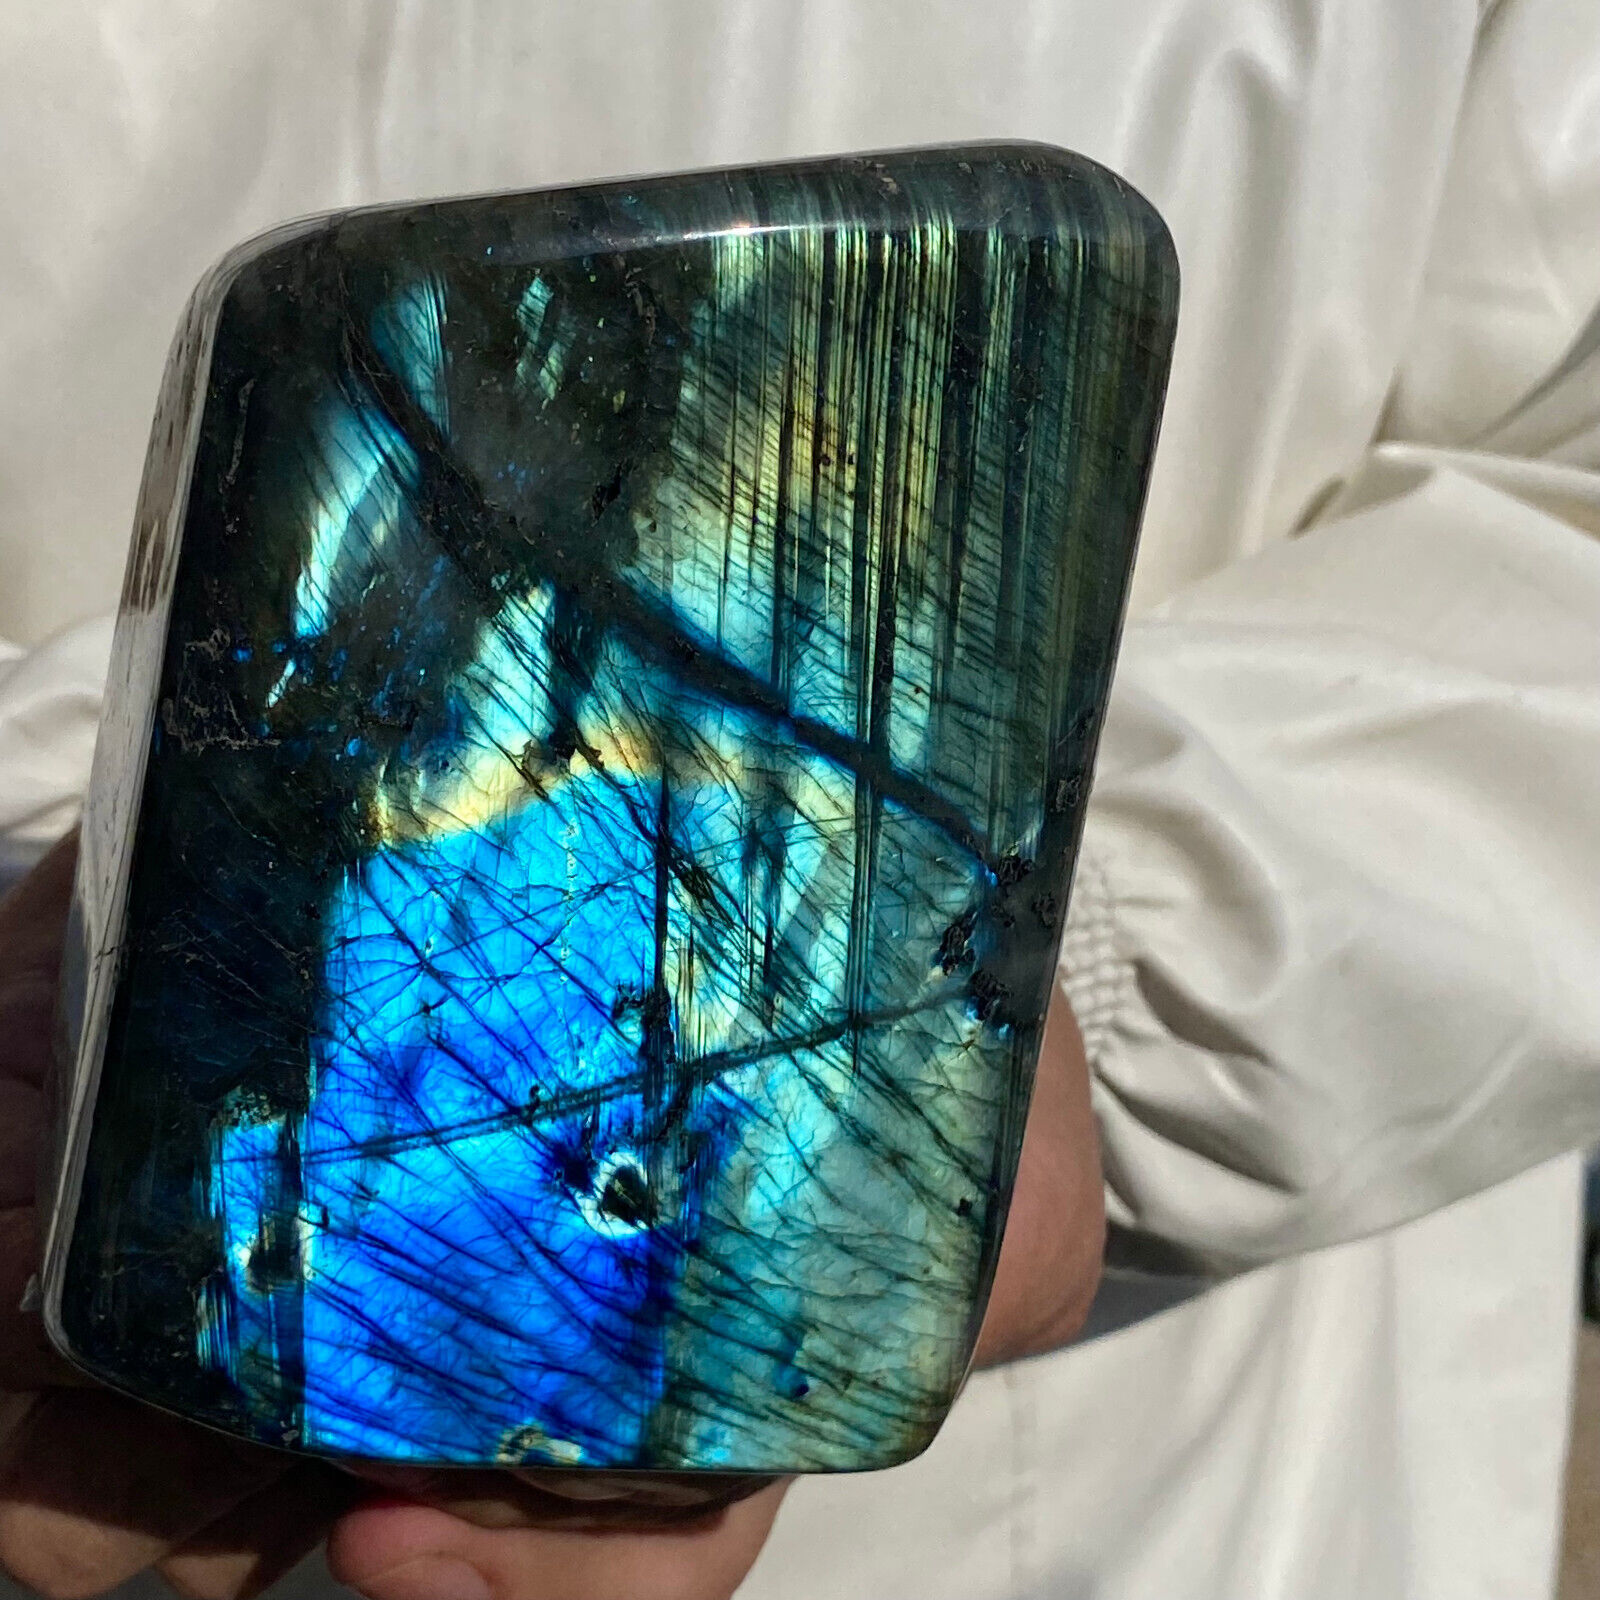 2.7lb Large Natural Labradorite Quartz Crystal Display Mineral Specimen Healing